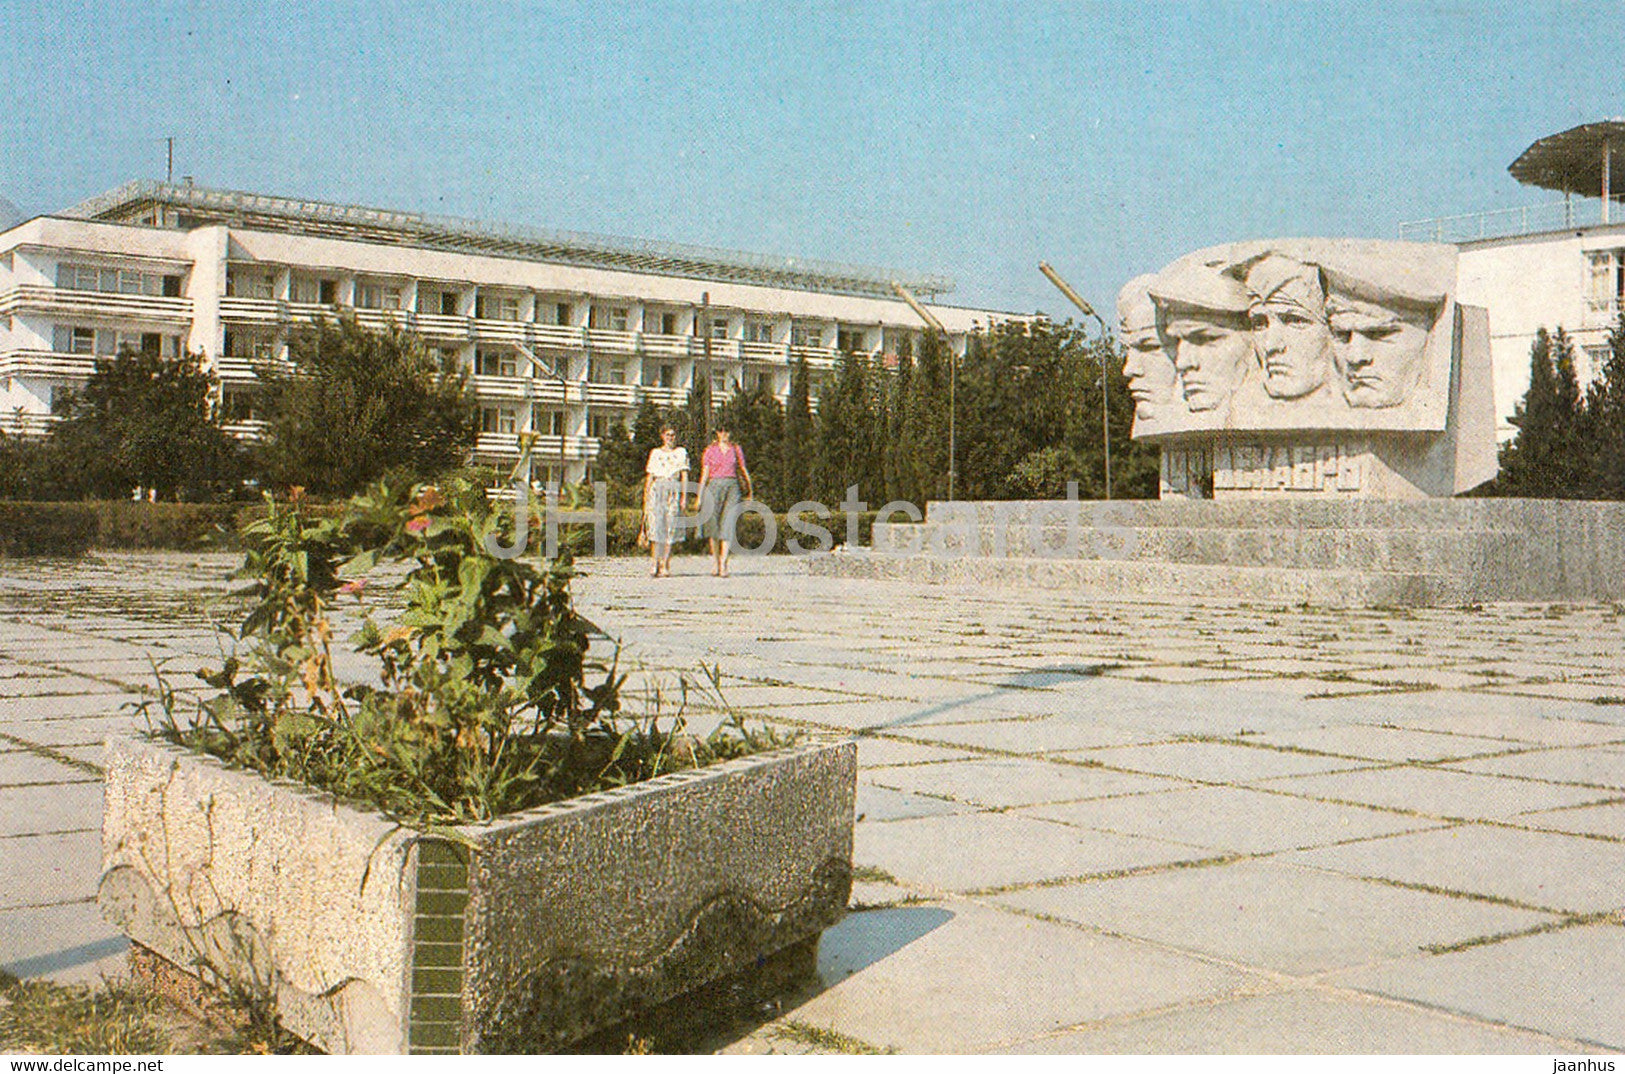 Planerskoye - Koktebel - monument to the soldiers of Koktebel Landing in 1941 - Crimea - 1989 - Ukraine USSR - unused - JH Postcards